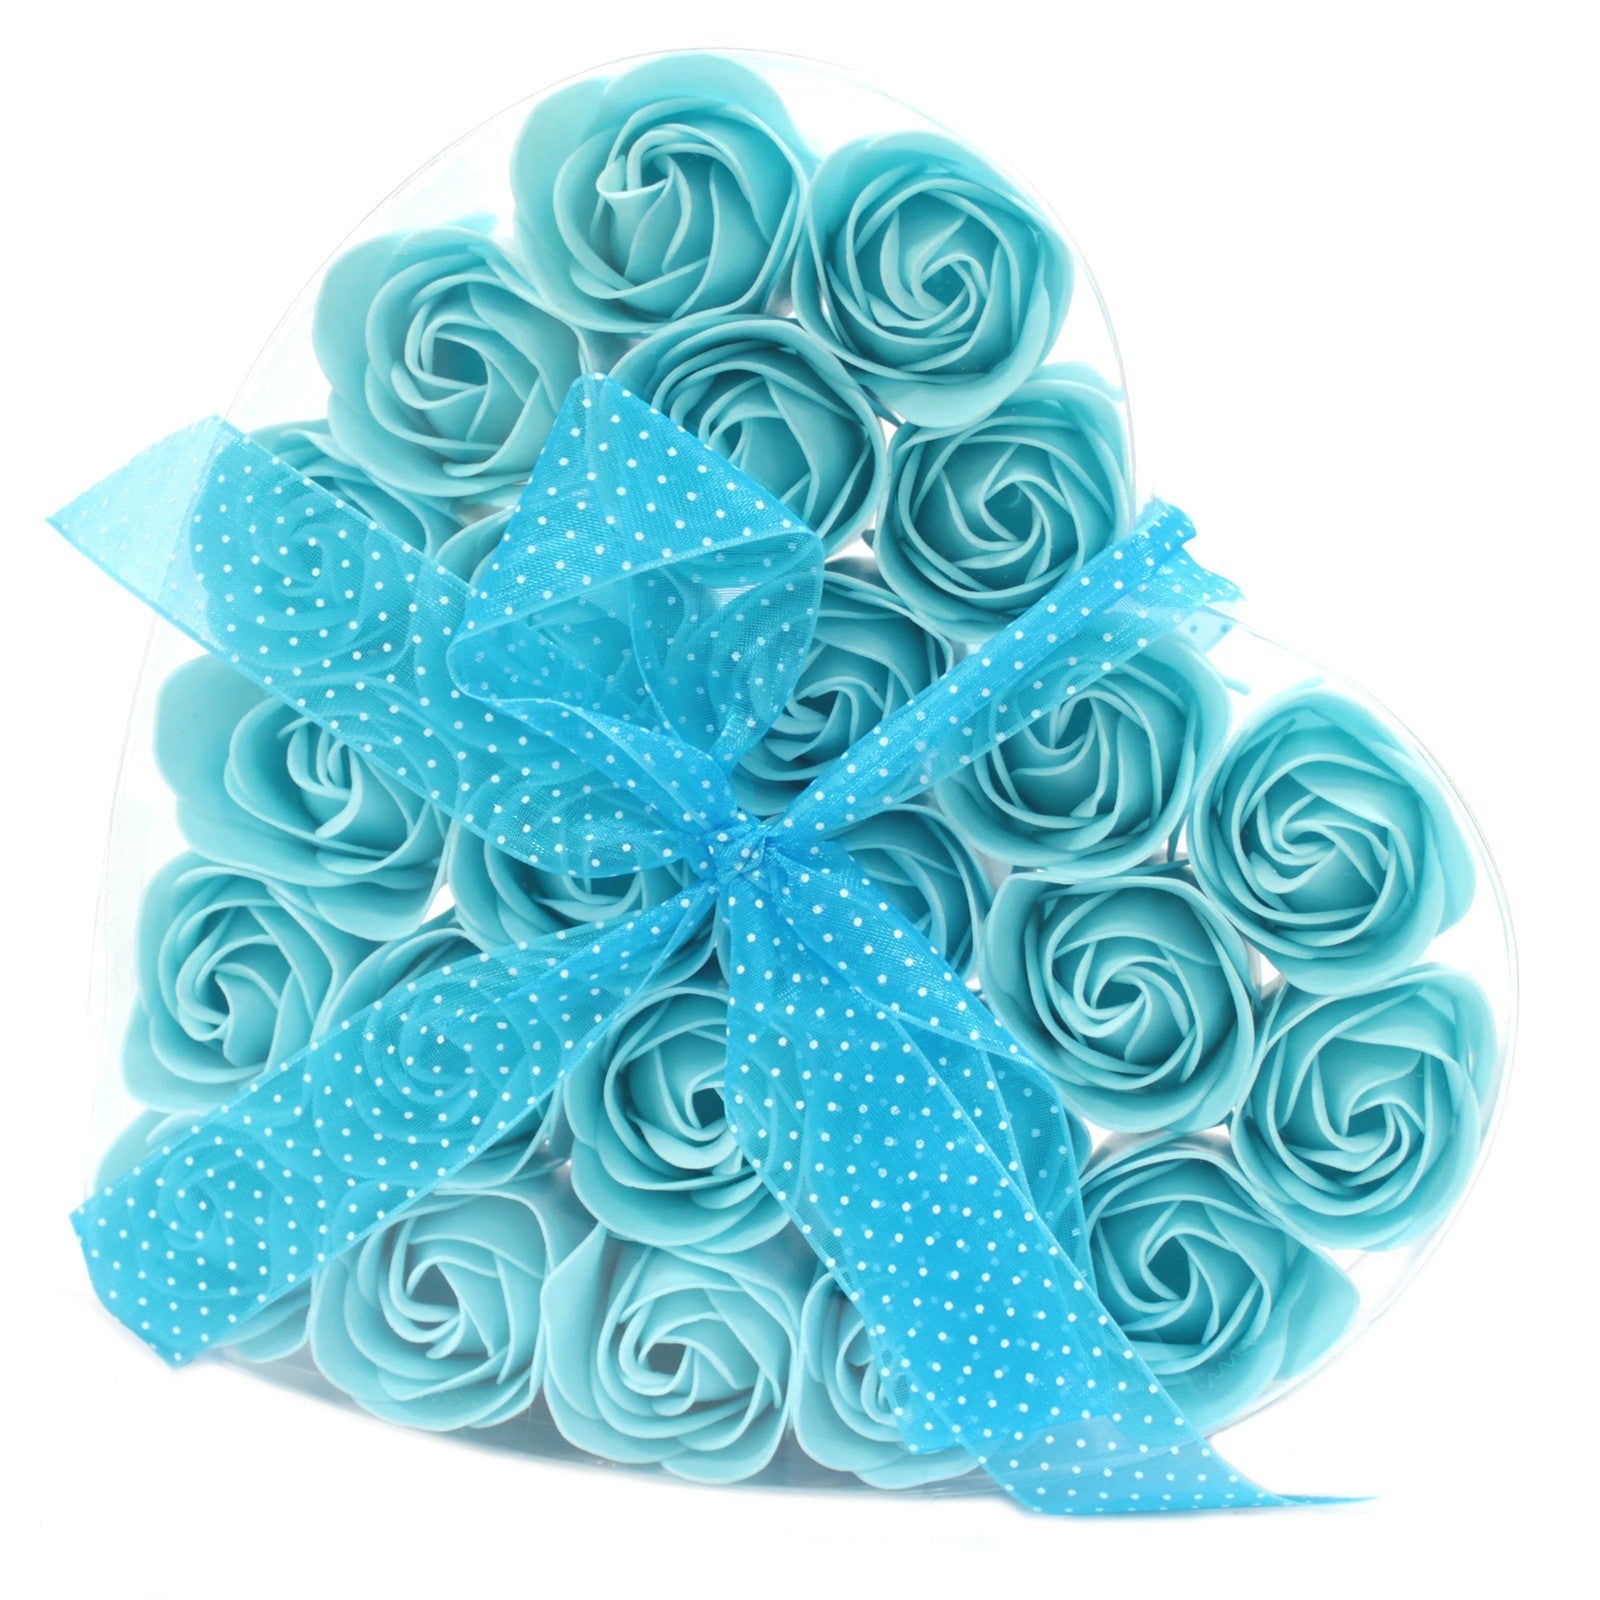 Set of 24 Soap Flower Heart Box - Blue Roses - Ultrabee